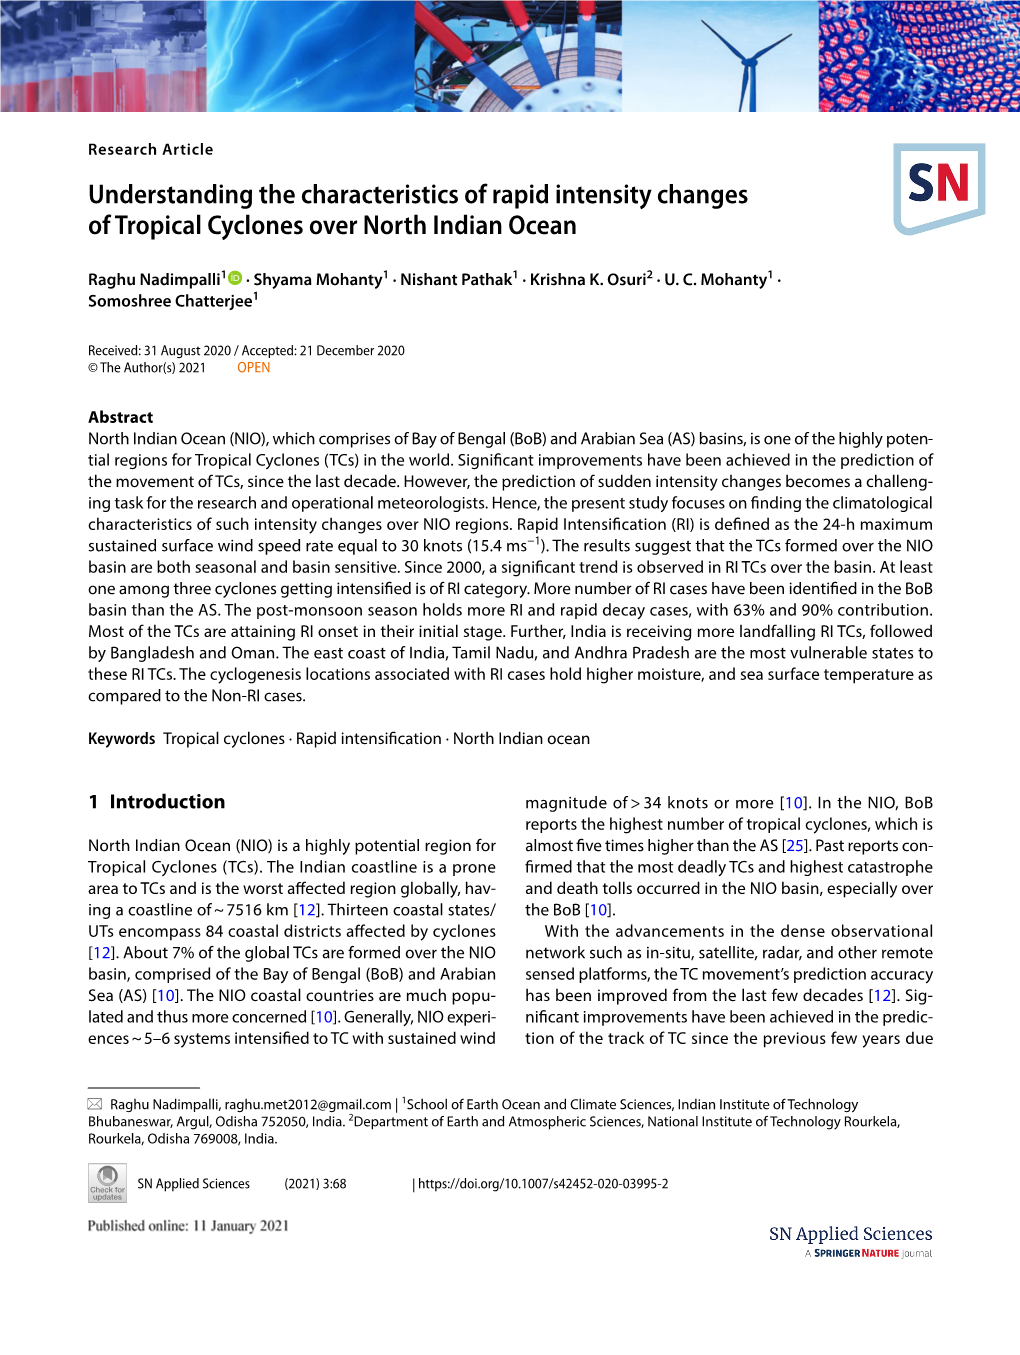 Understanding the Characteristics of Rapid Intensity Changes of Tropical Cyclones Over North Indian Ocean